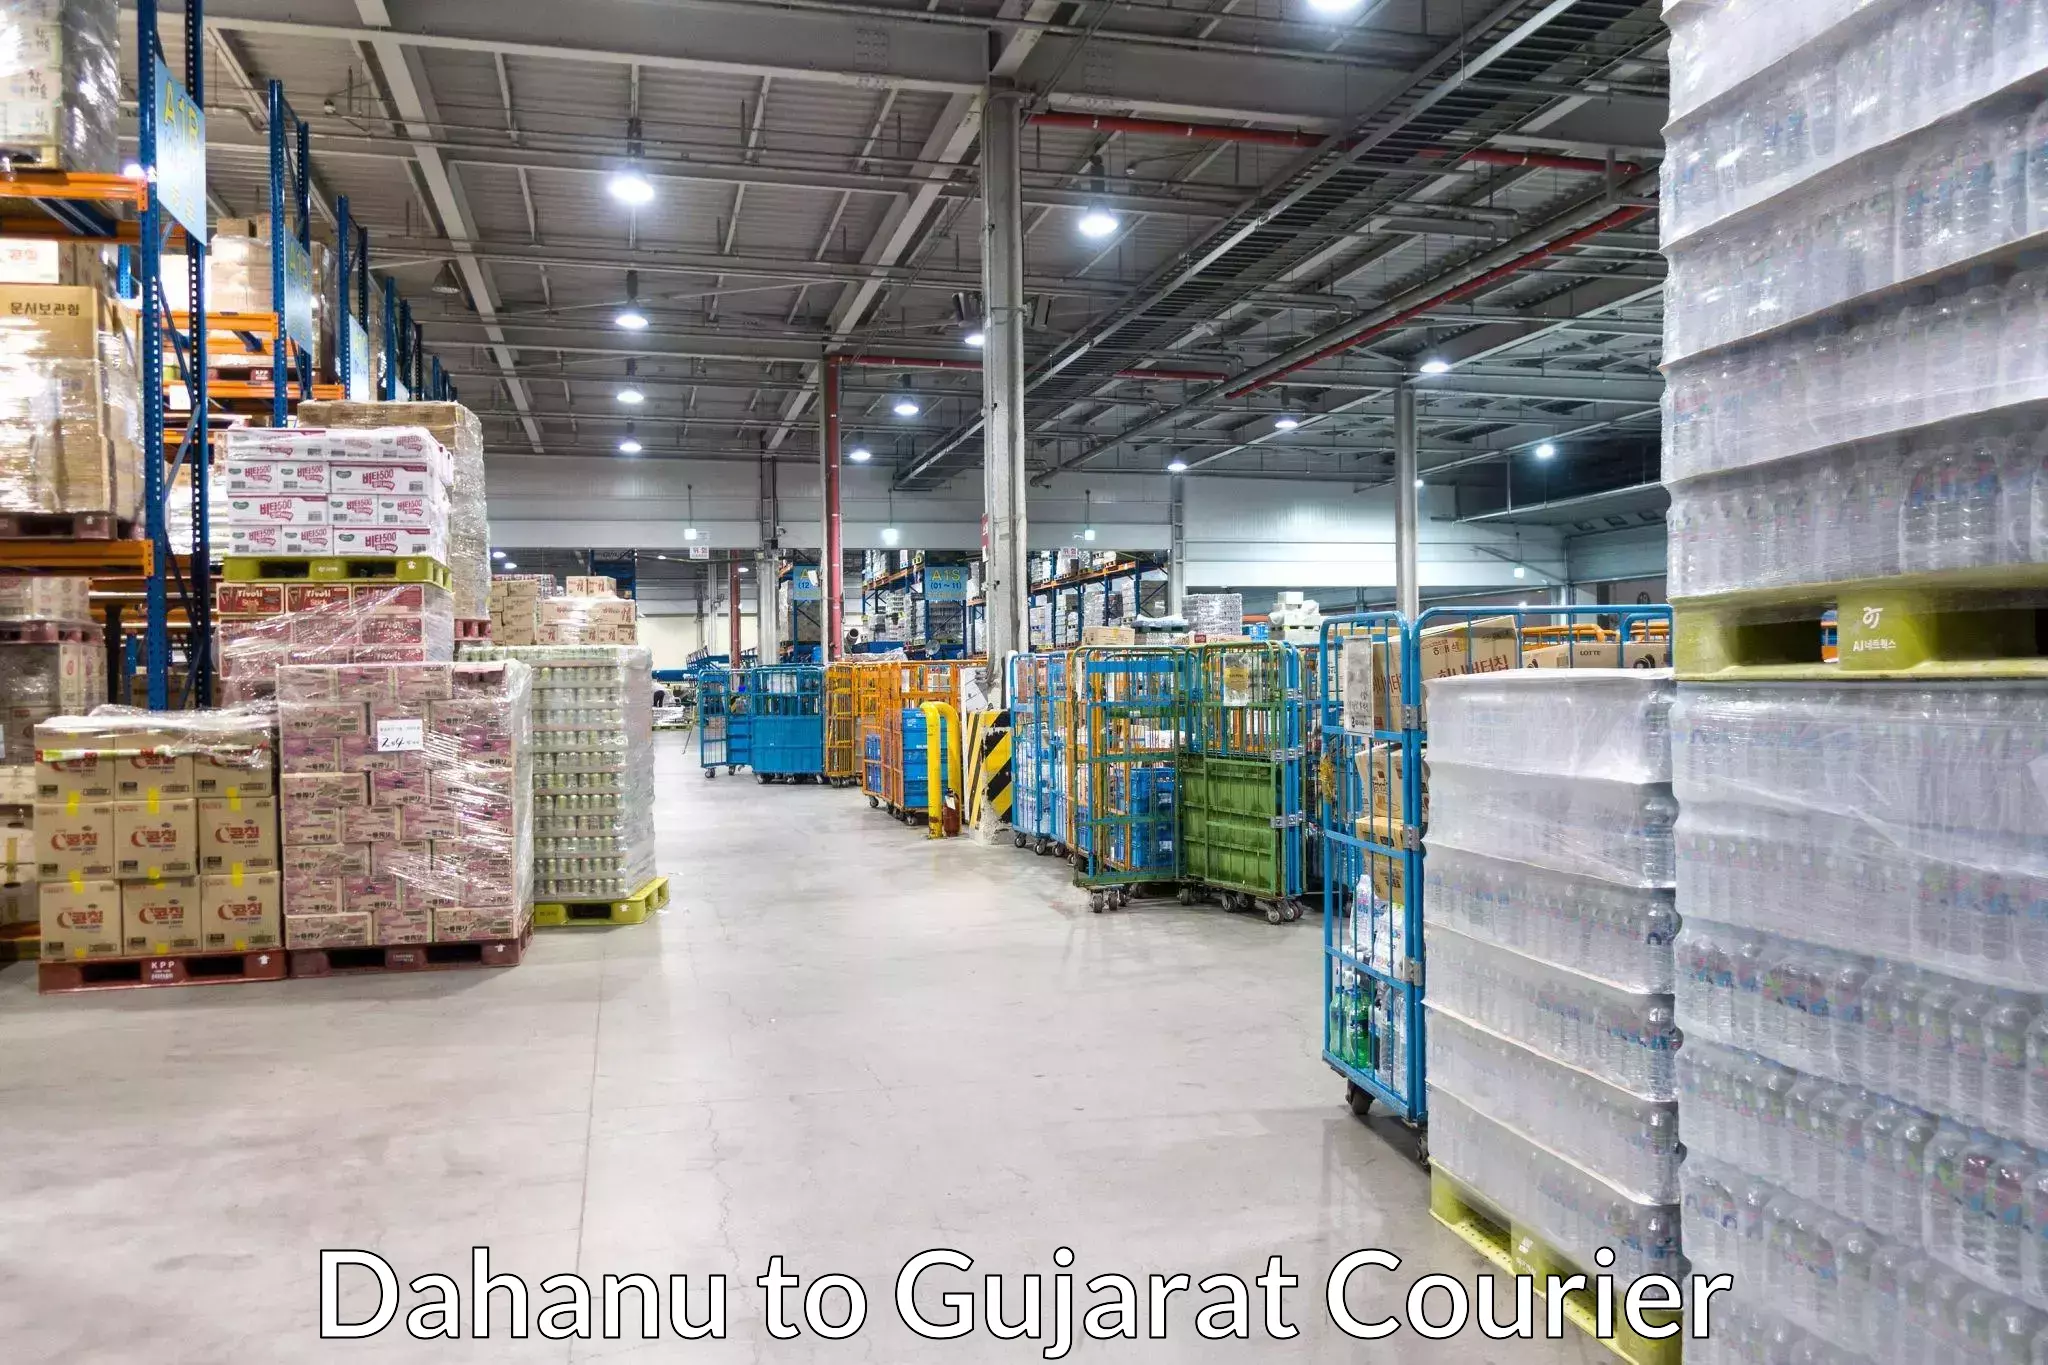 Trusted relocation experts Dahanu to Gujarat